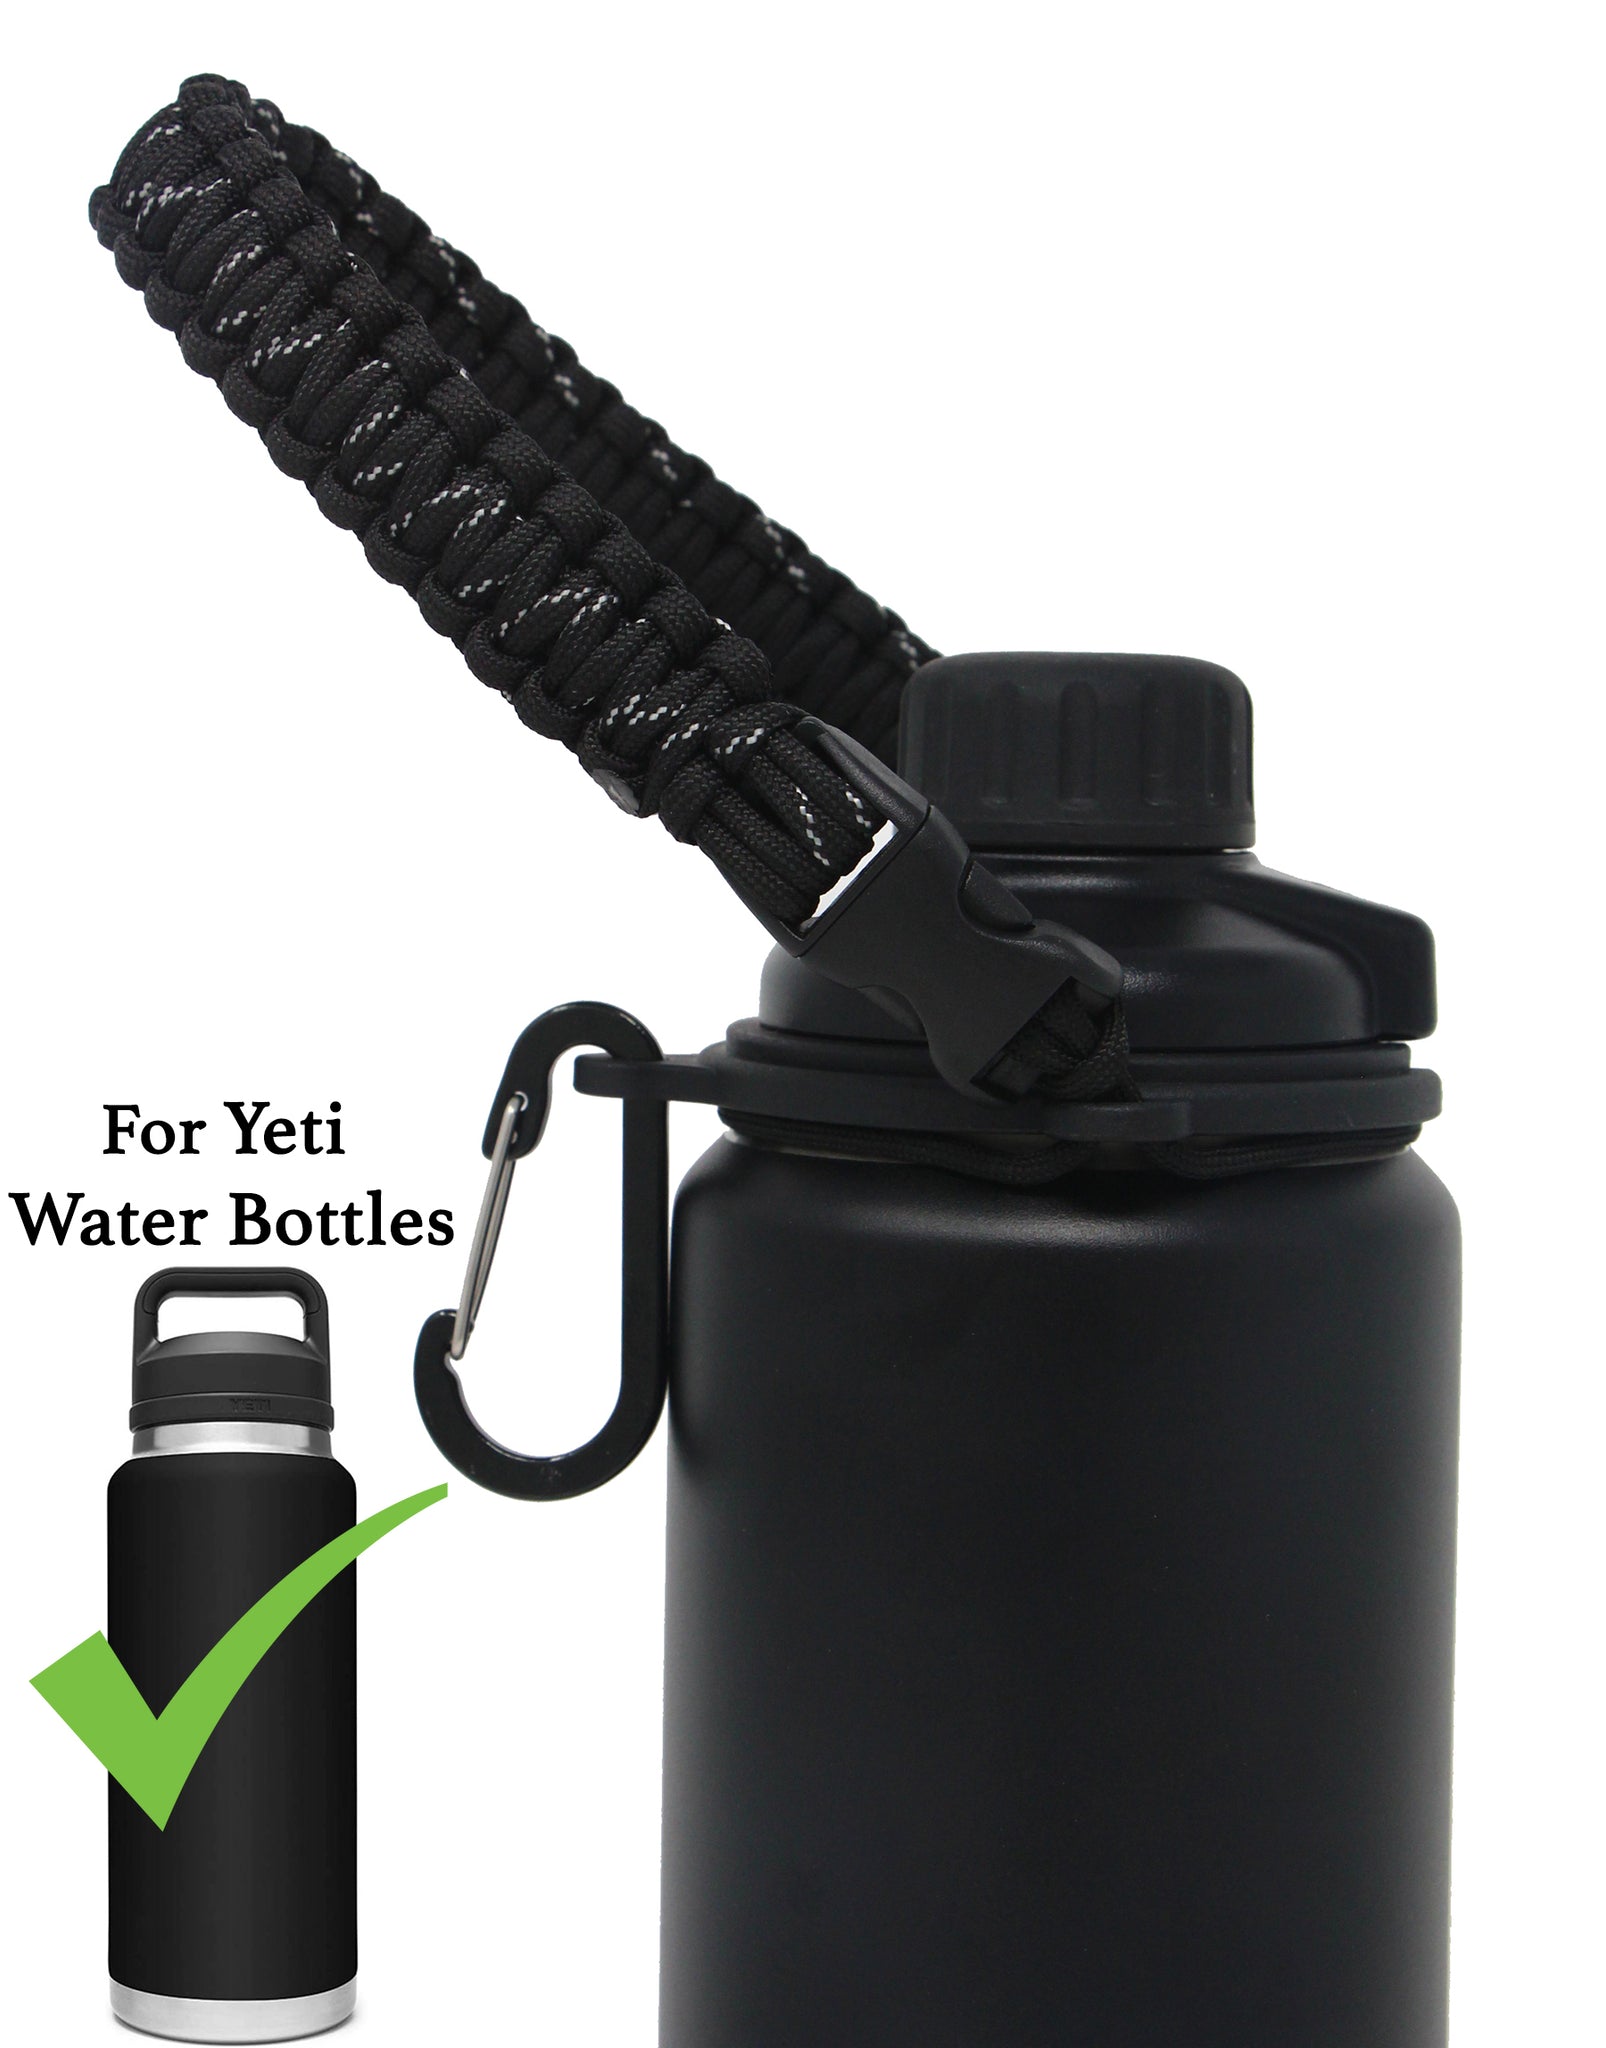 YETI 18-oz. Rambler Water Bottle with Straw Cap